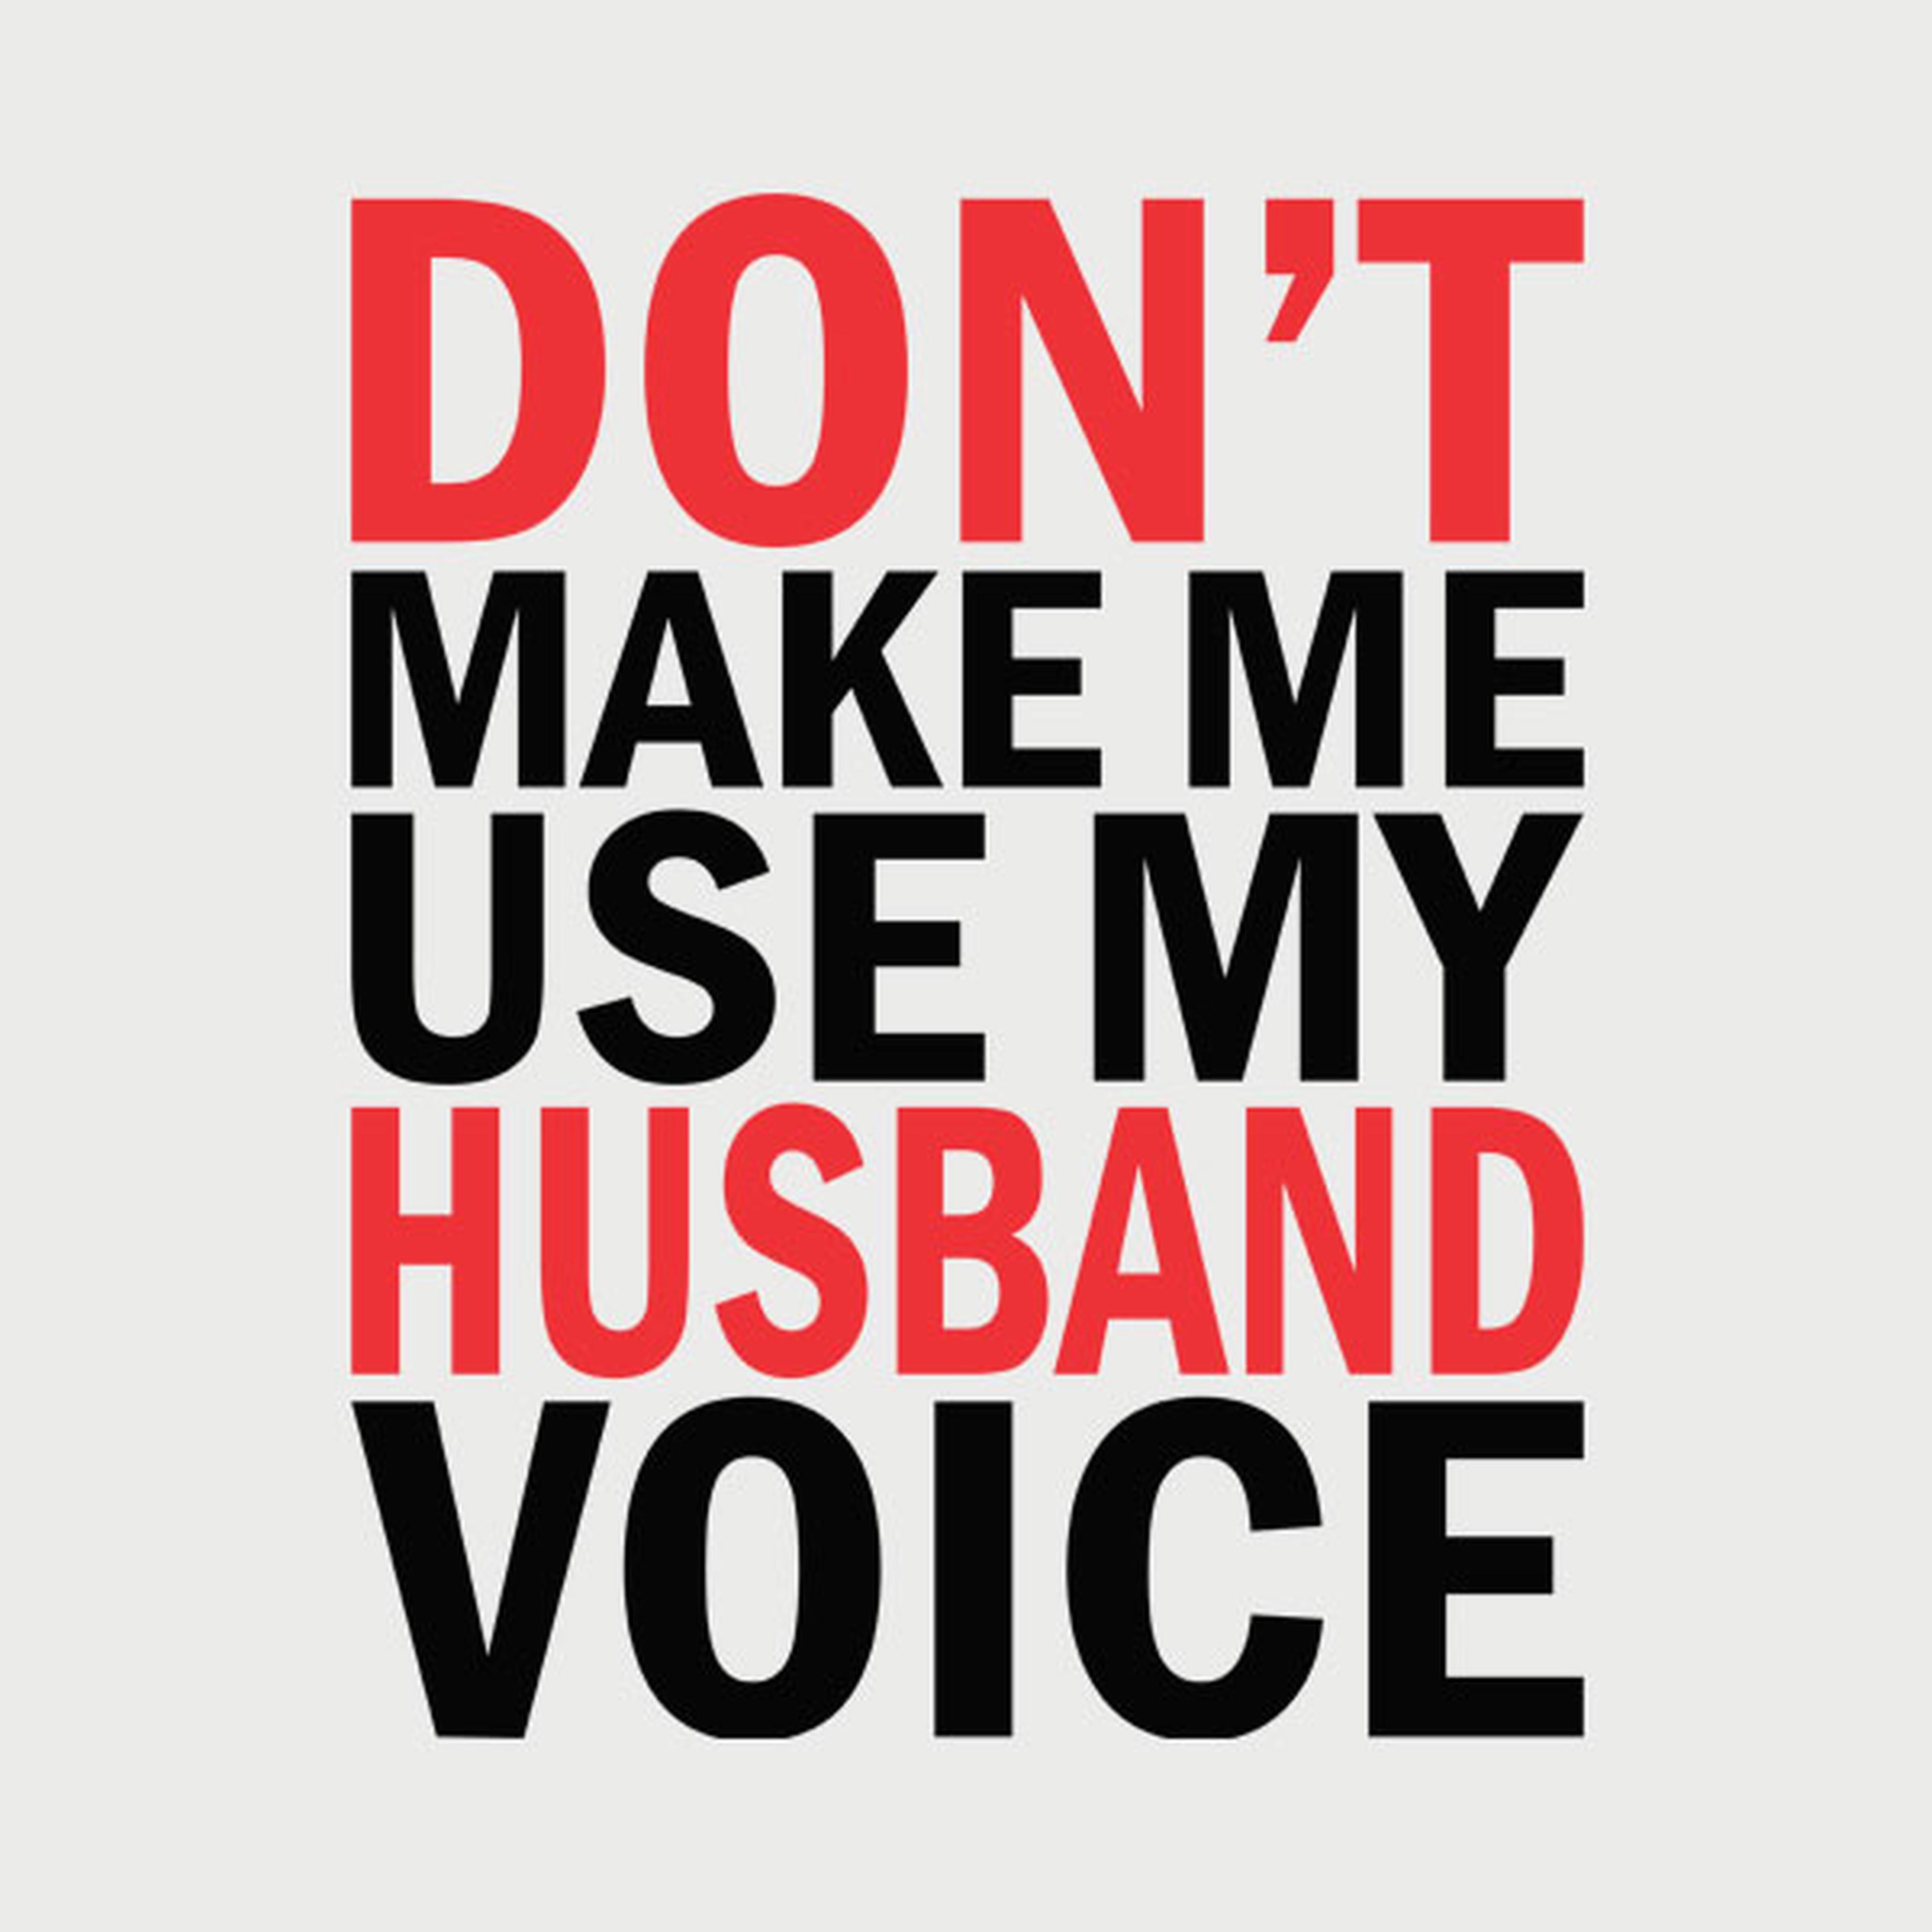 Don't make me use my HUSBAND voice